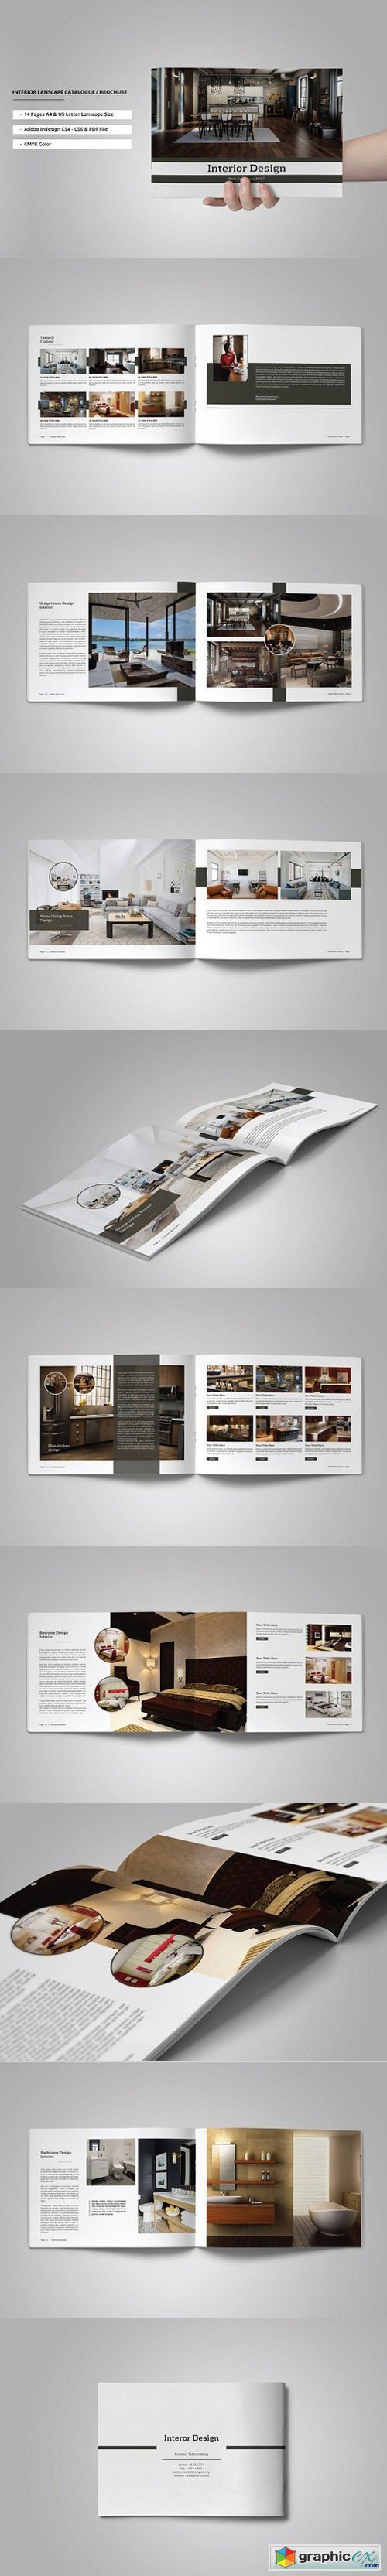 Interior Lanscape Catalog/Brochure